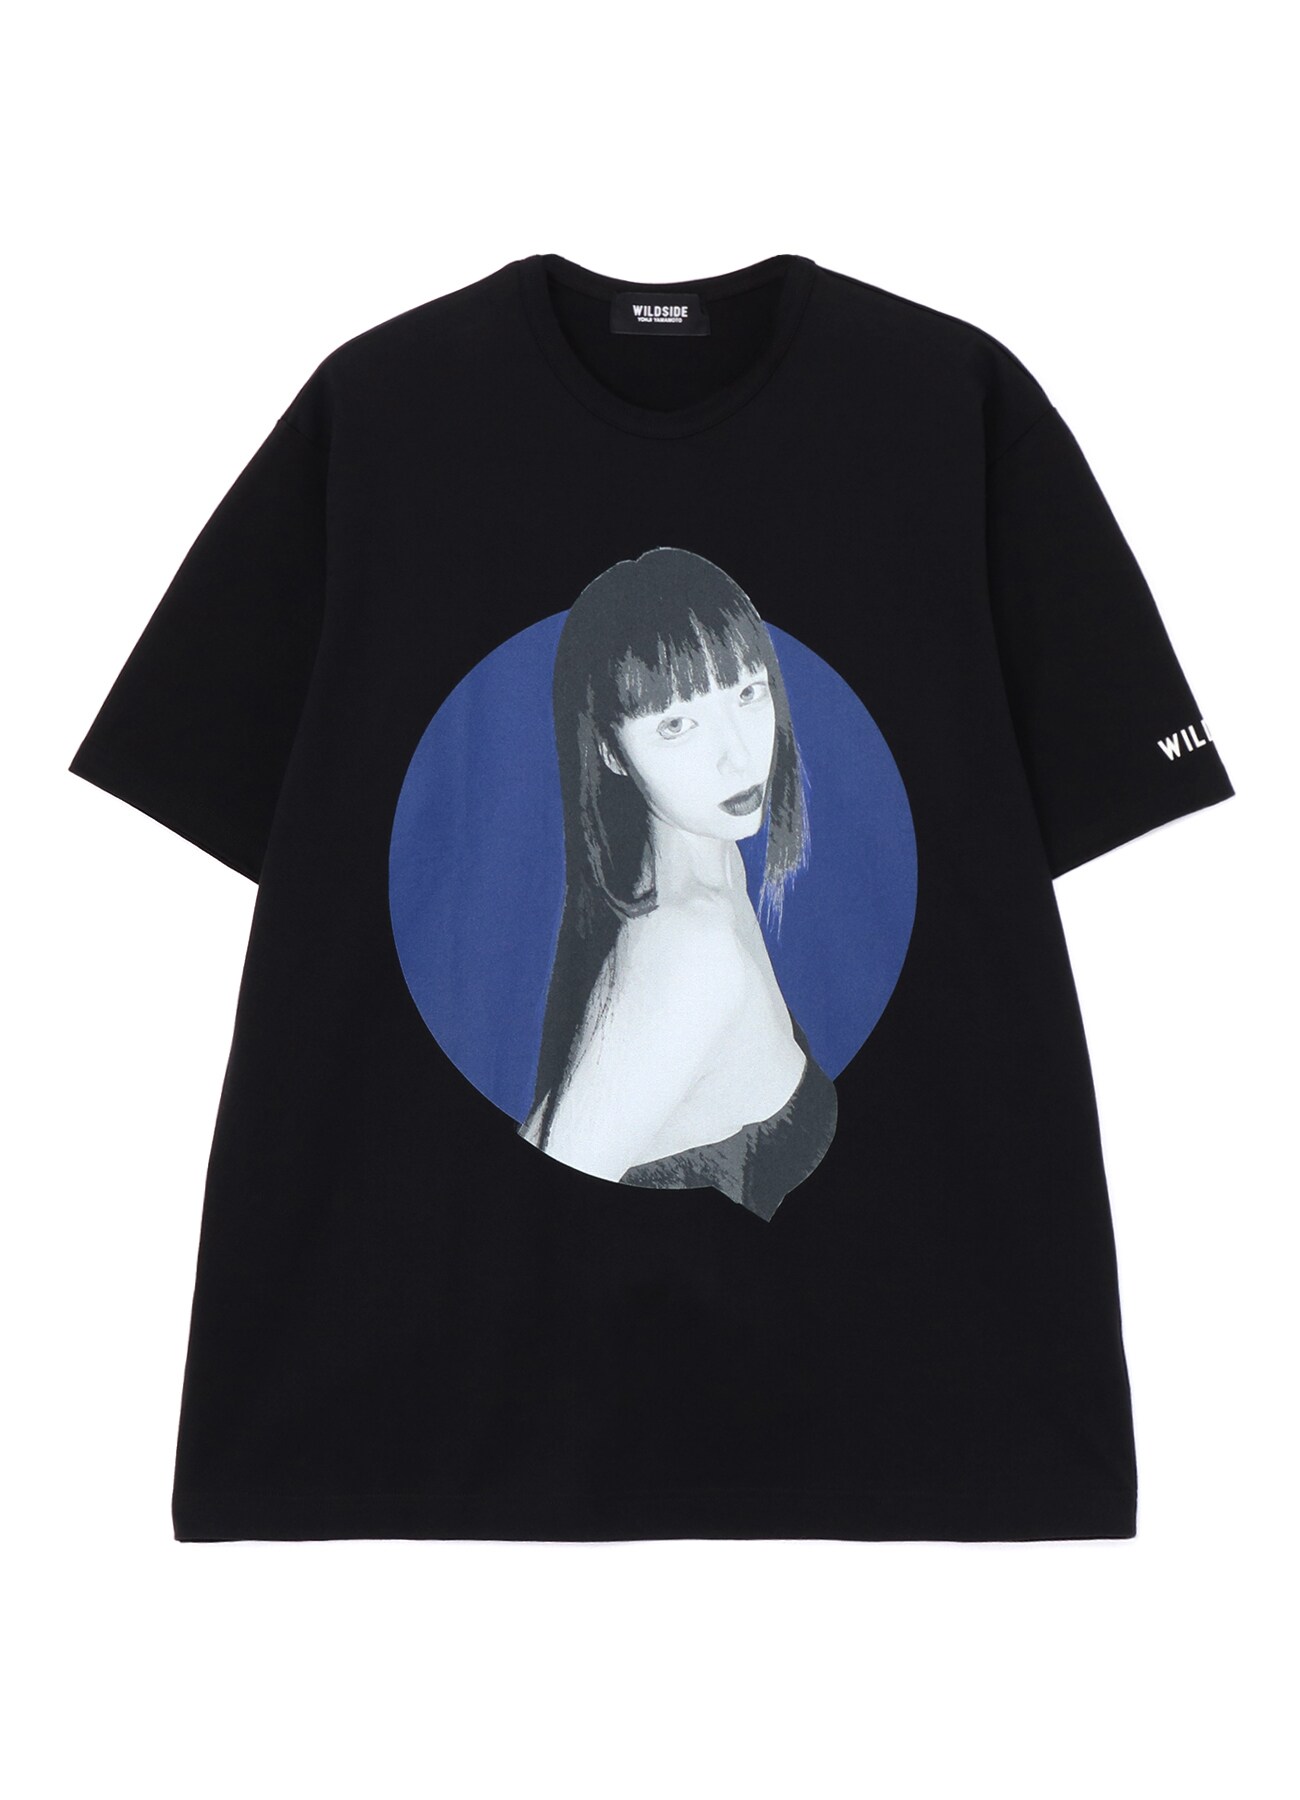 WILDSIDE × Kie Einzelganger Portrait T-shirt C